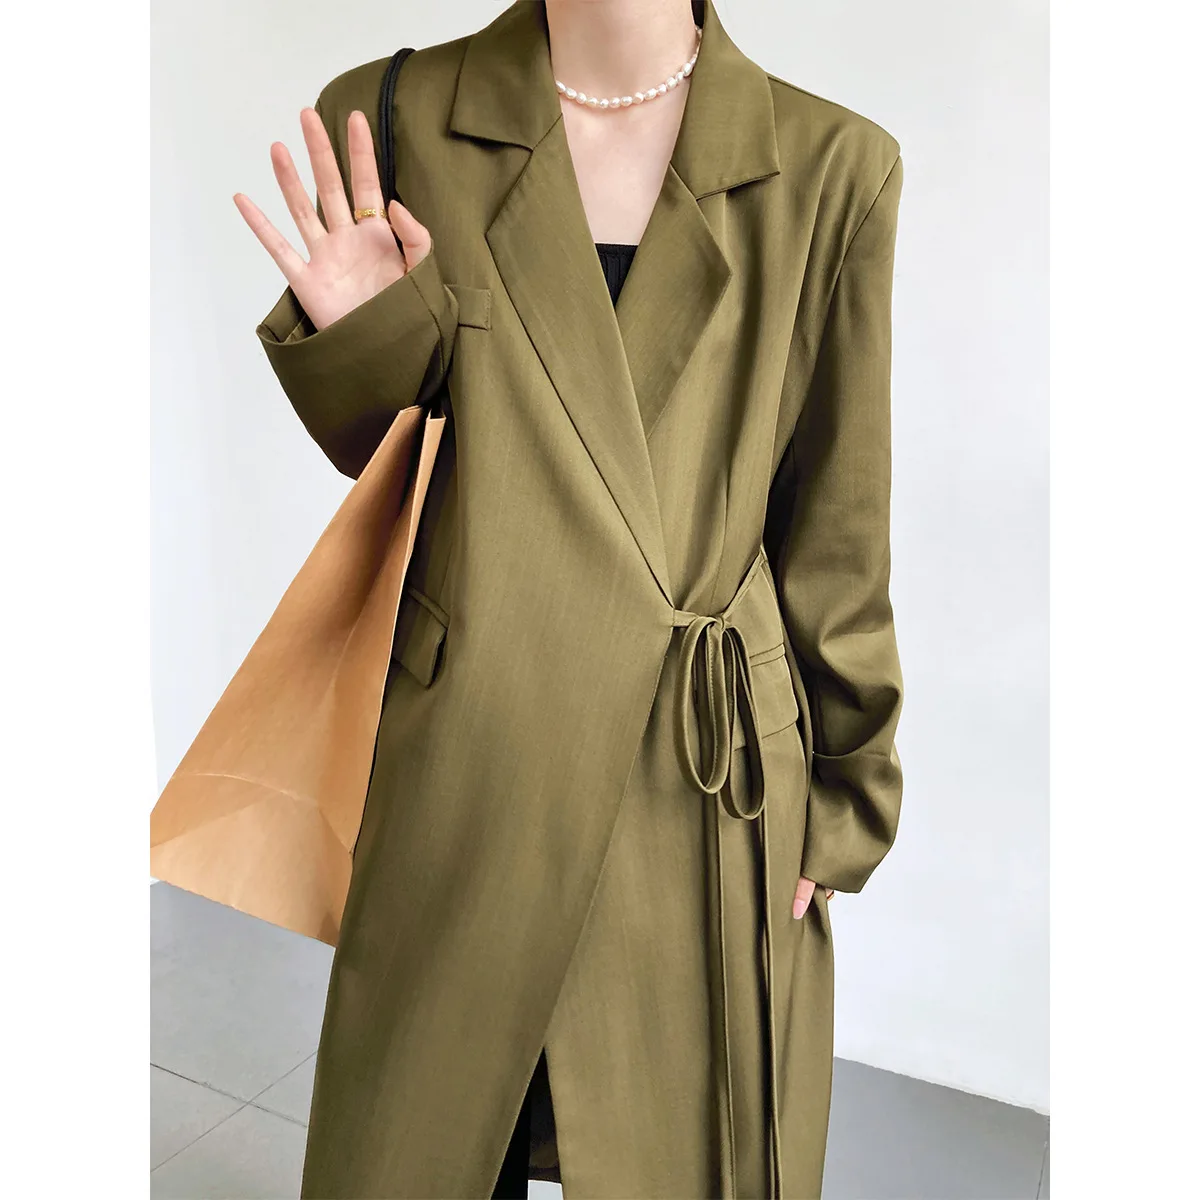 Oversize Medium length Suit Coat Women's Casual High grade Oblique Lace up Coat